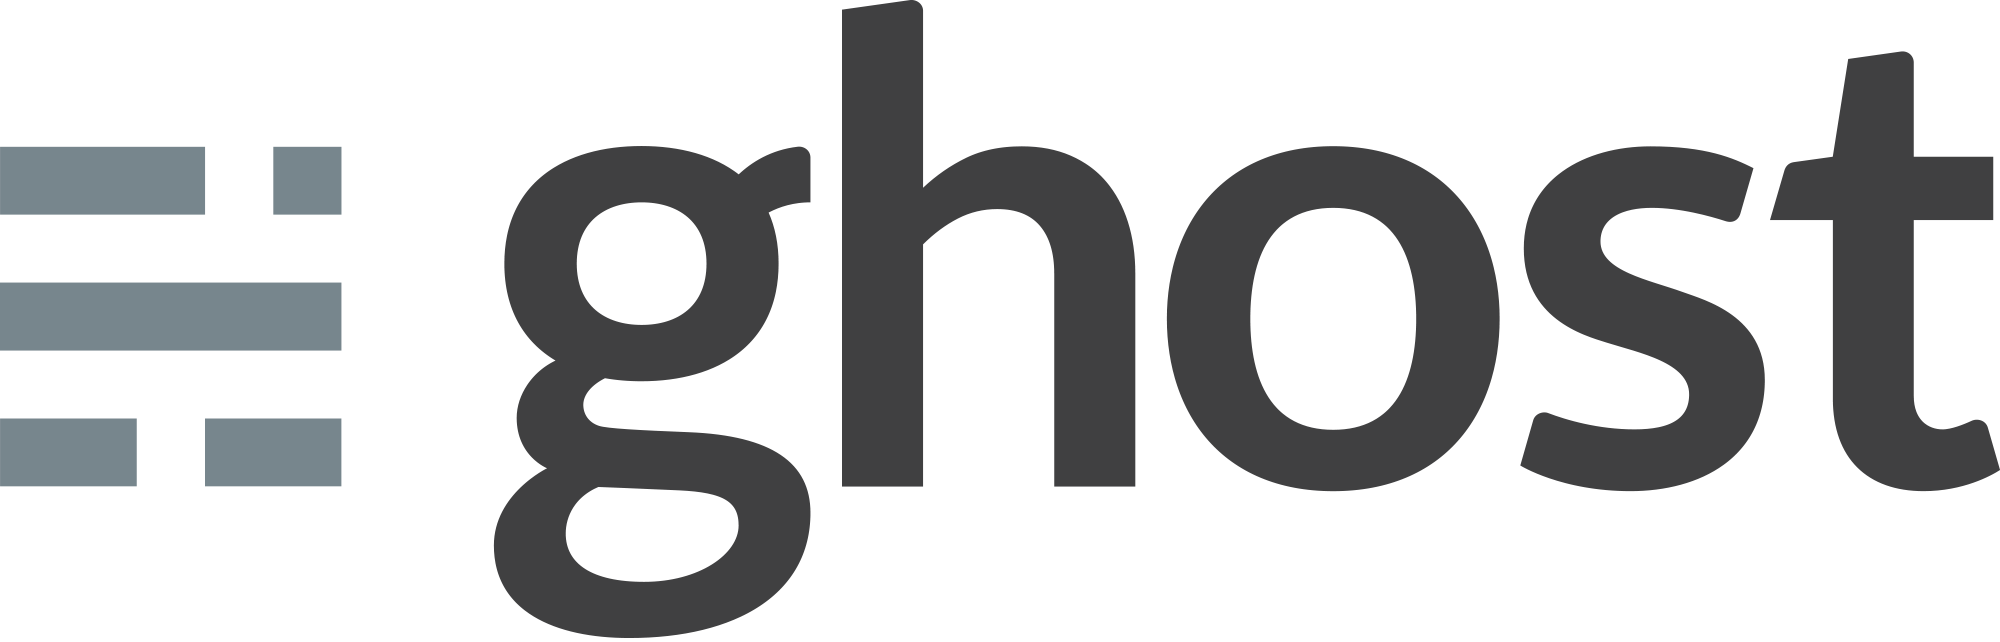 White Ghost Logo - Ghost Logo